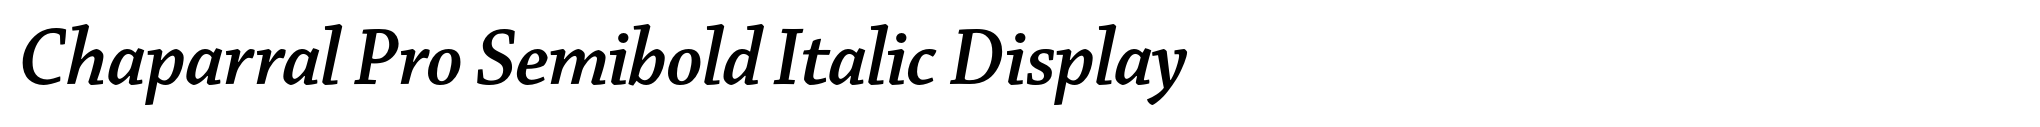 Chaparral Pro Semibold Italic Display image